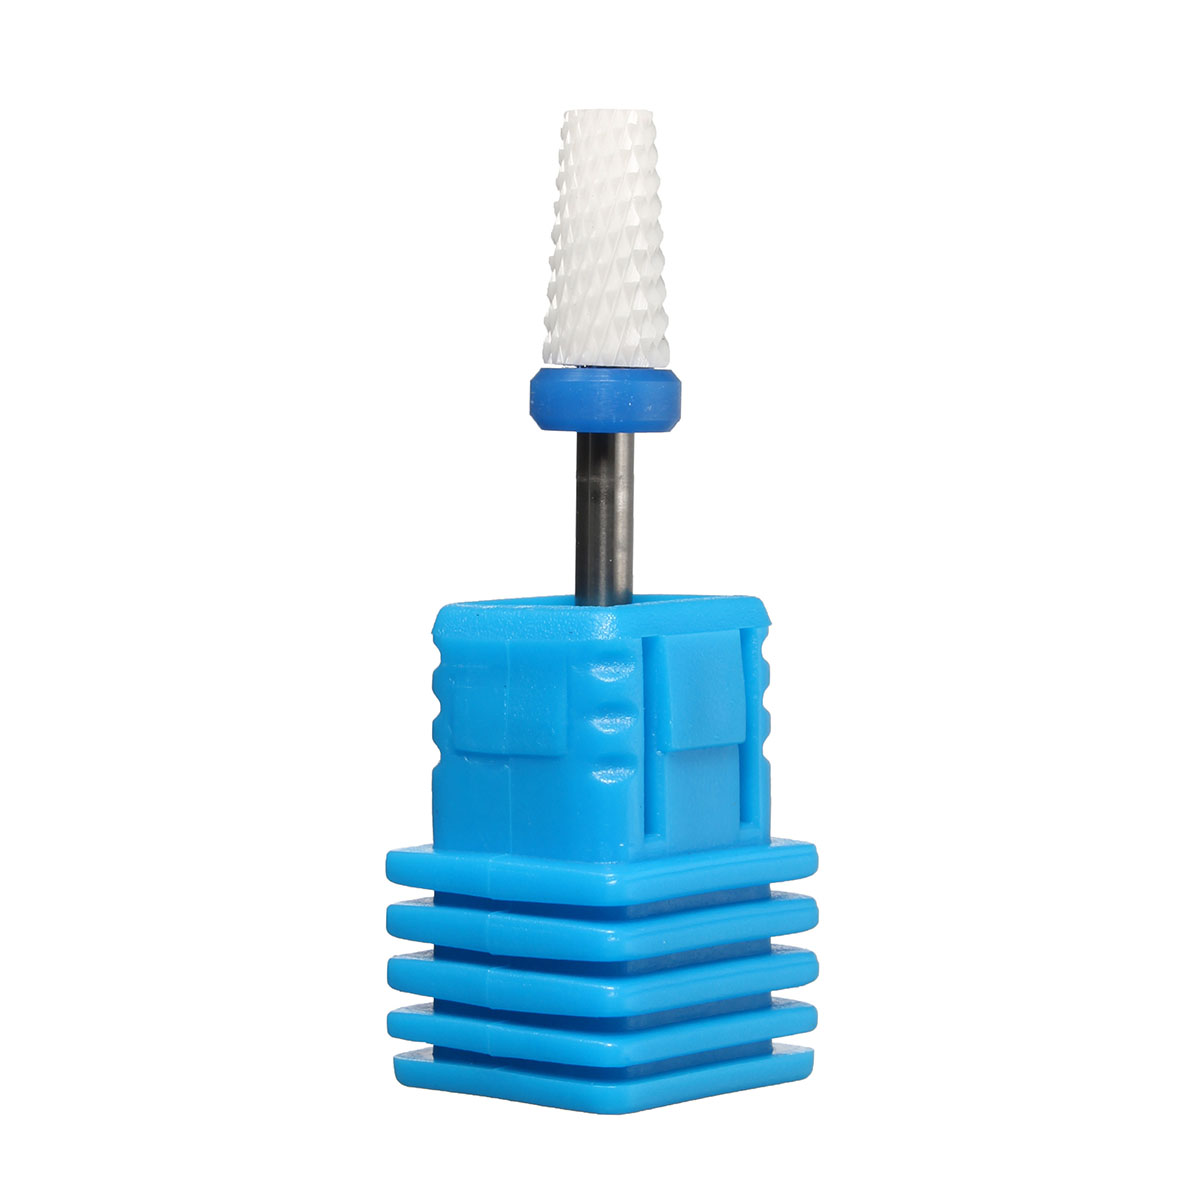 5pcs-Ceramic-Nail-Drill-Bit-Set-Smooth-Tapered-Brush-Rotary-File-Cuticle-Manicure-Pedicure-Salon-Kit-1129869-4